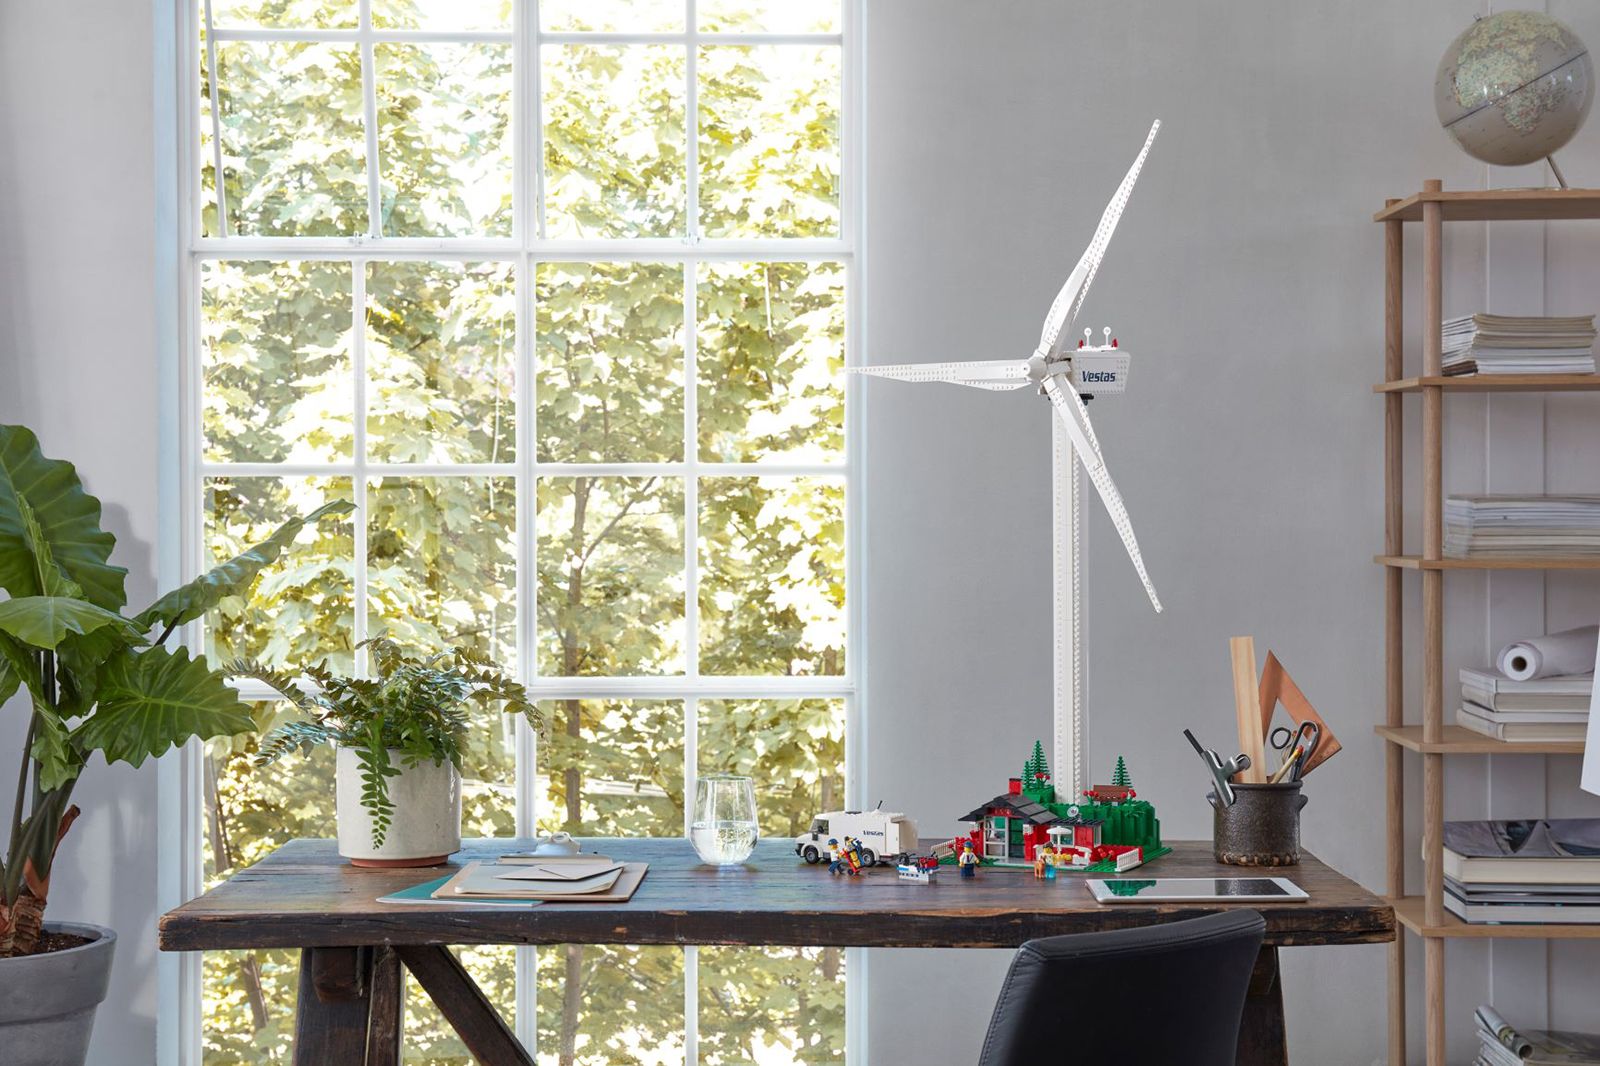 Legos new Creator Expert set is a wind turbine image 1